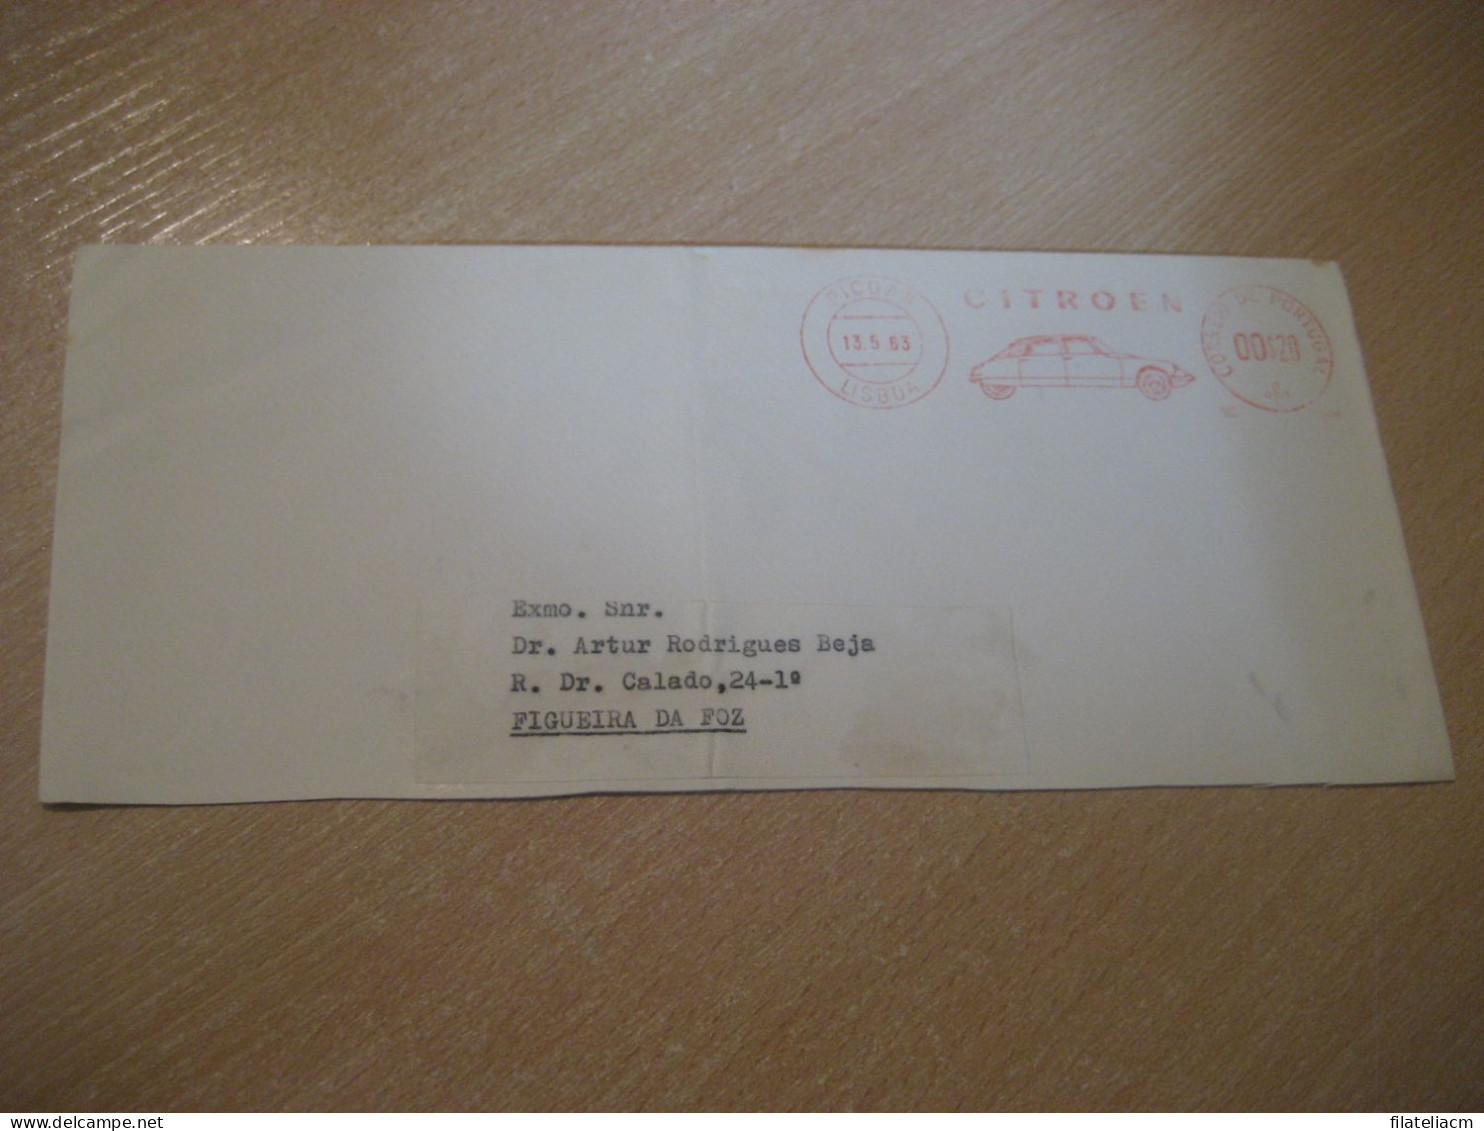 LISBOA 1963 To Figueira Da Foz CITROEN Auto Car Meter Mail Cancel Cut Cuted Cover PORTUGAL - Lettres & Documents